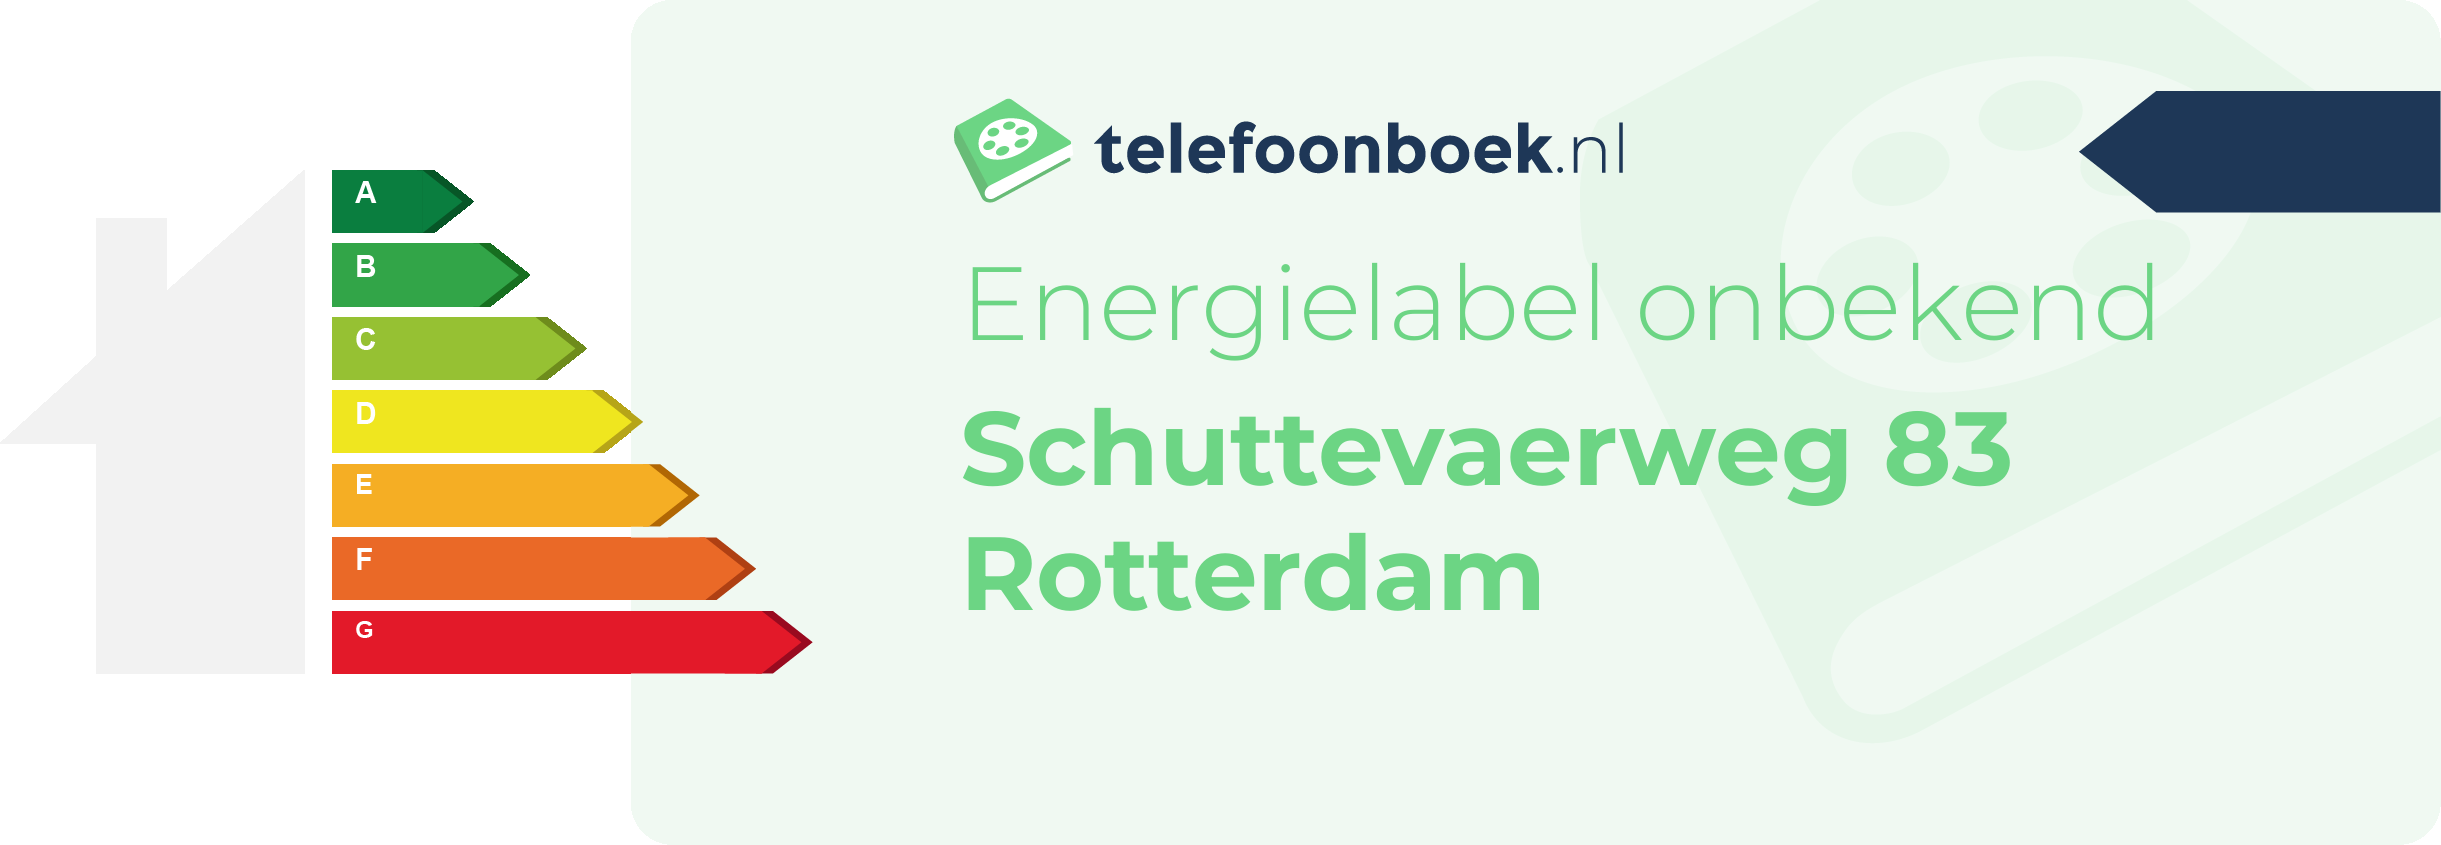 Energielabel Schuttevaerweg 83 Rotterdam